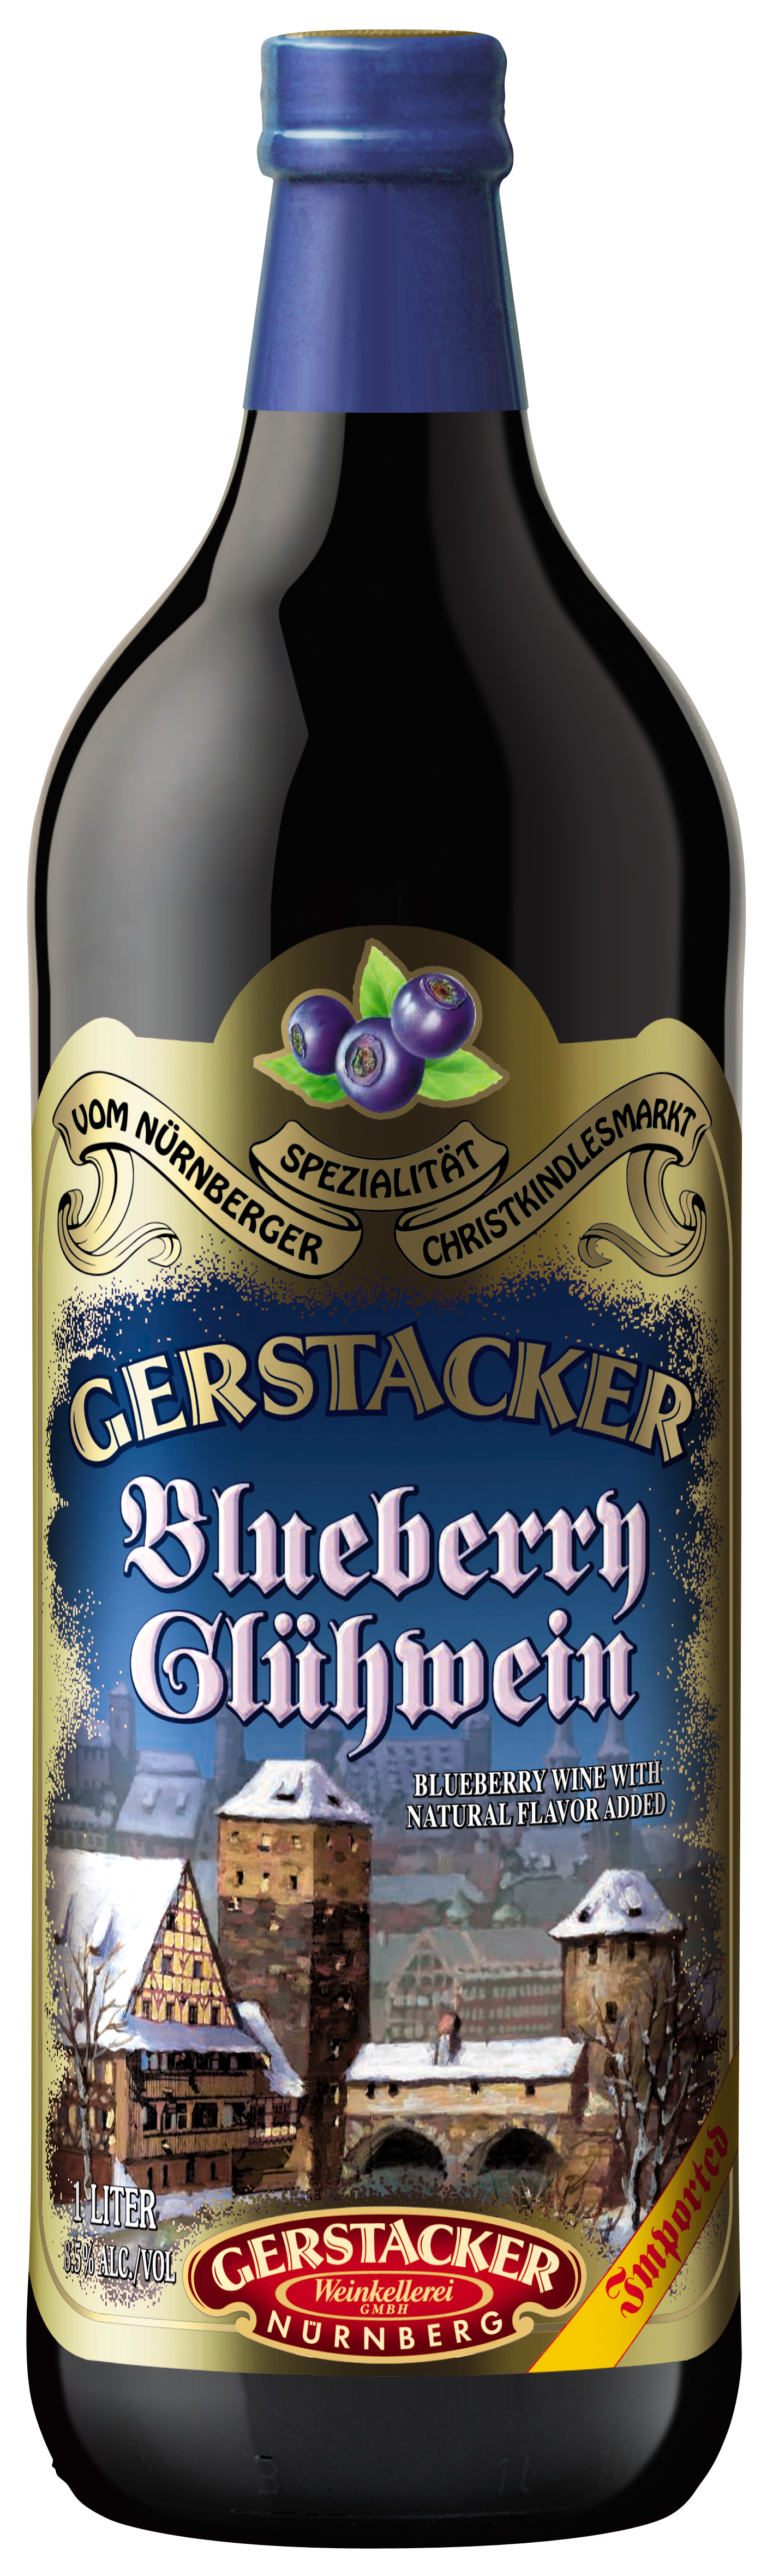 Gerstacker Blueberry Mulled Wine